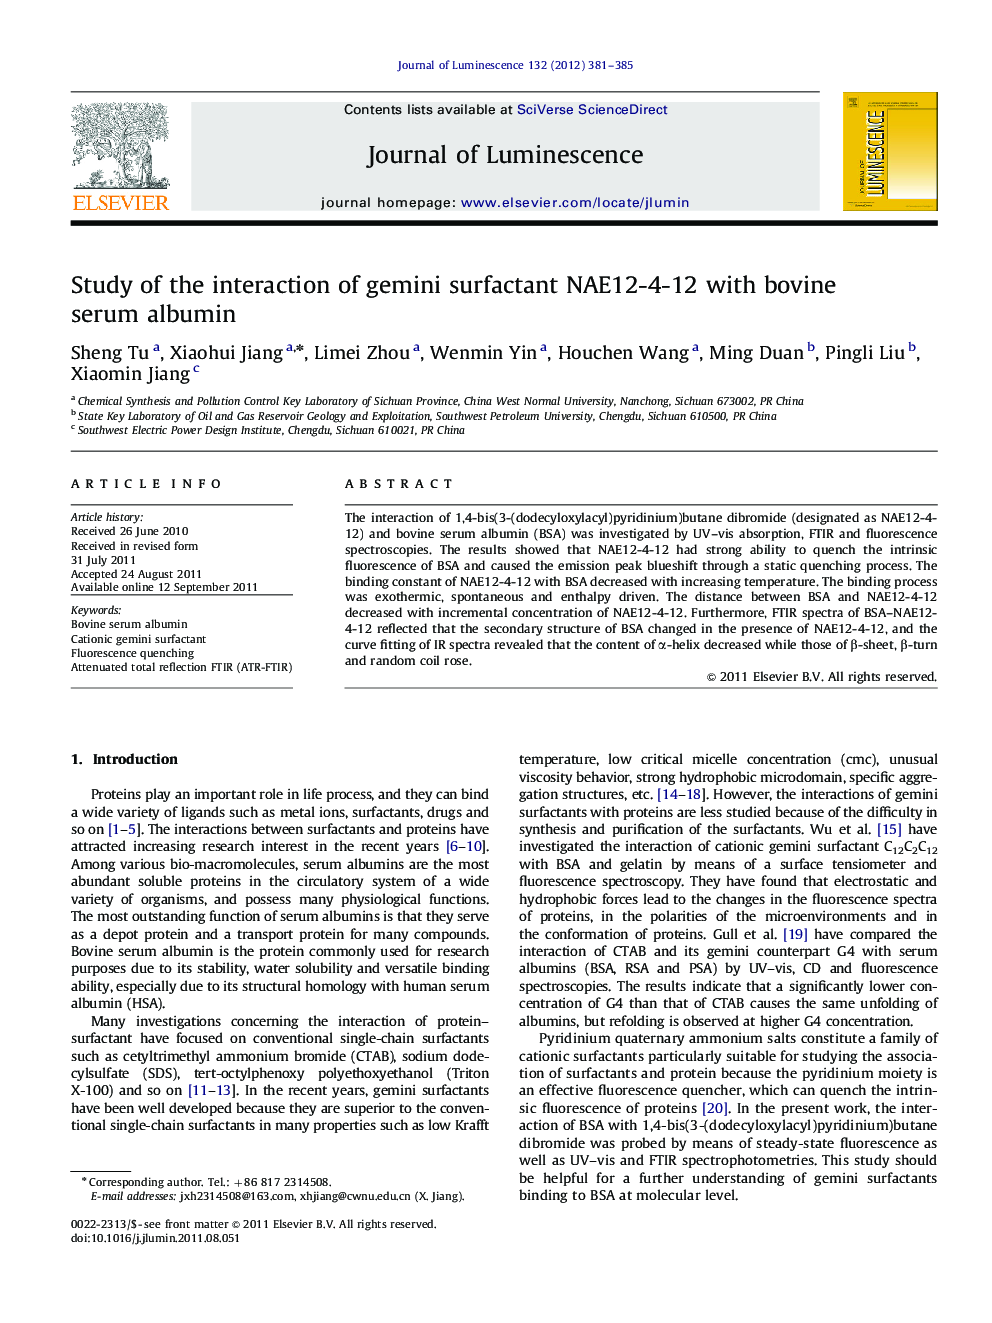 Study of the interaction of gemini surfactant NAE12-4-12 with bovine serum albumin